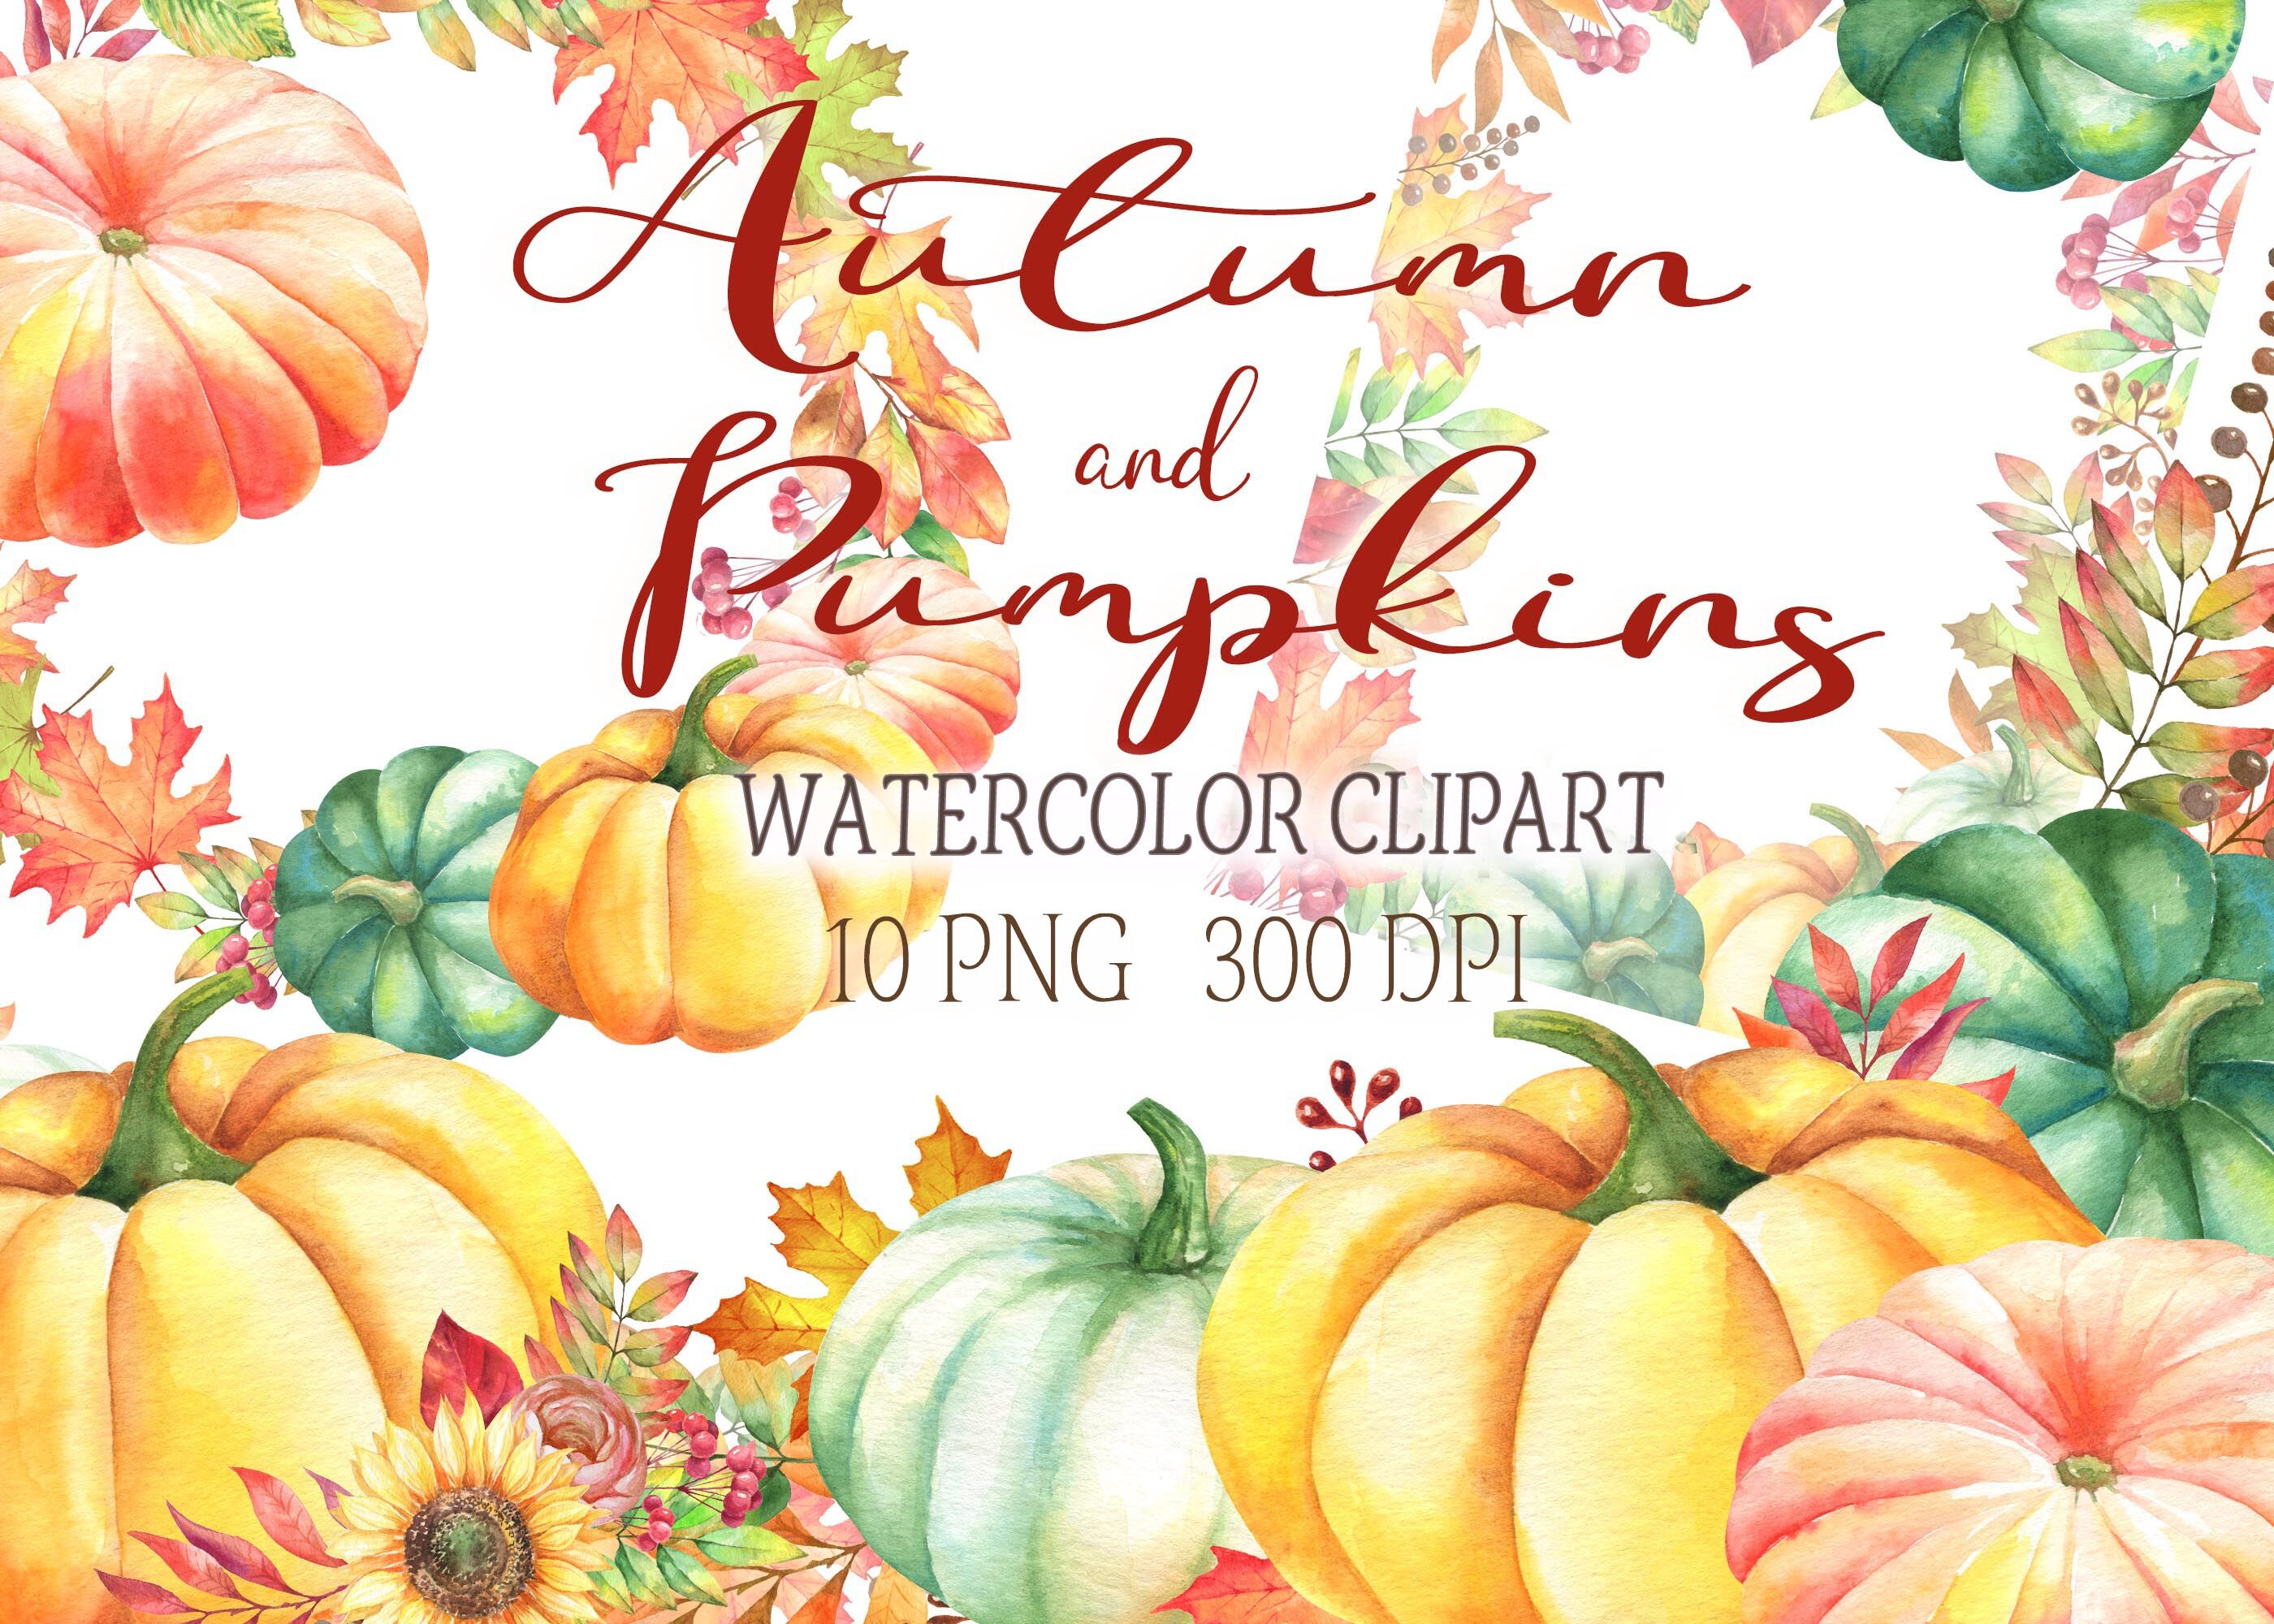 autumn background clipart